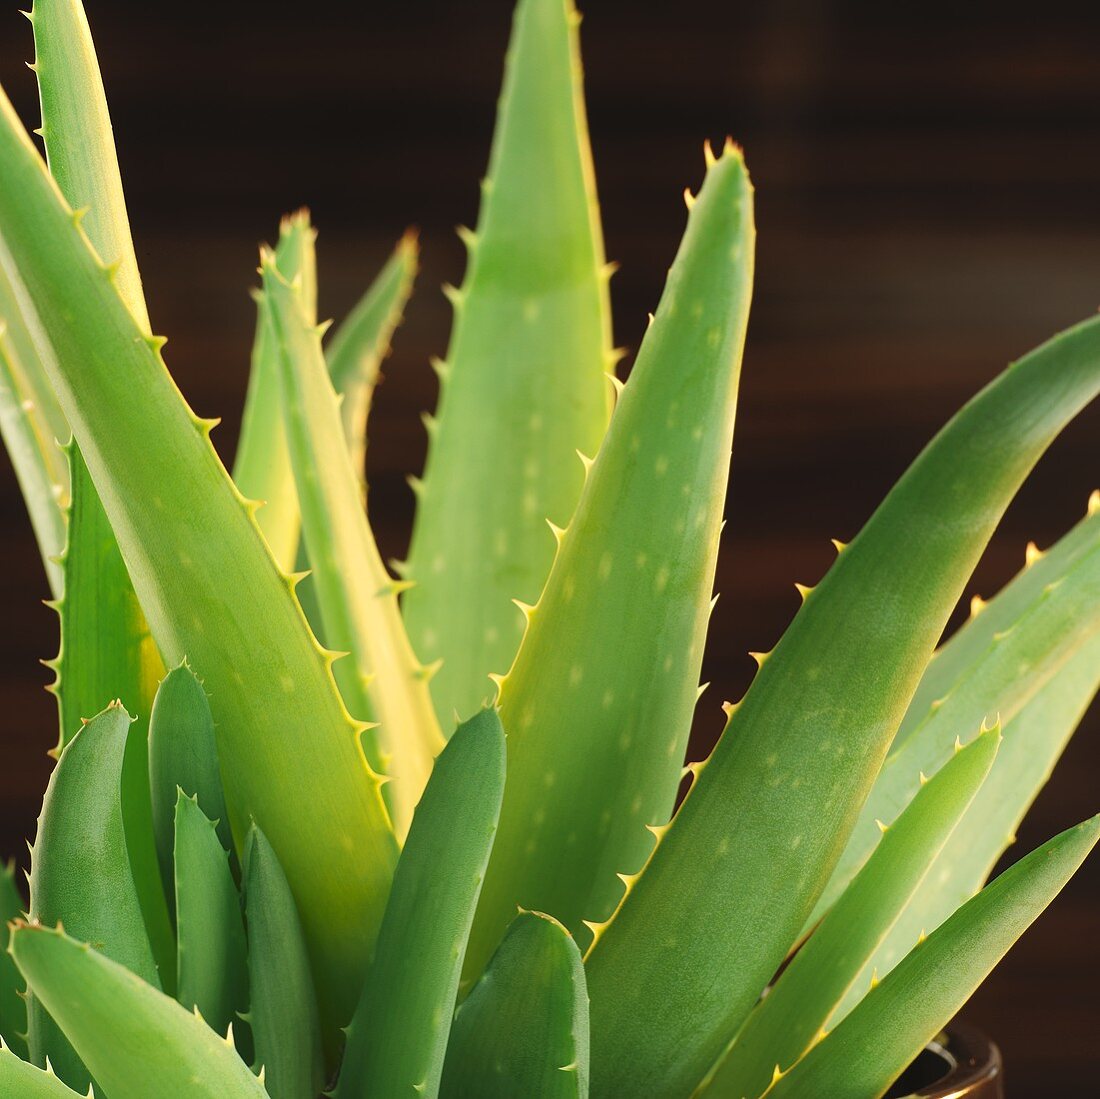 Aloe vera plant in pot